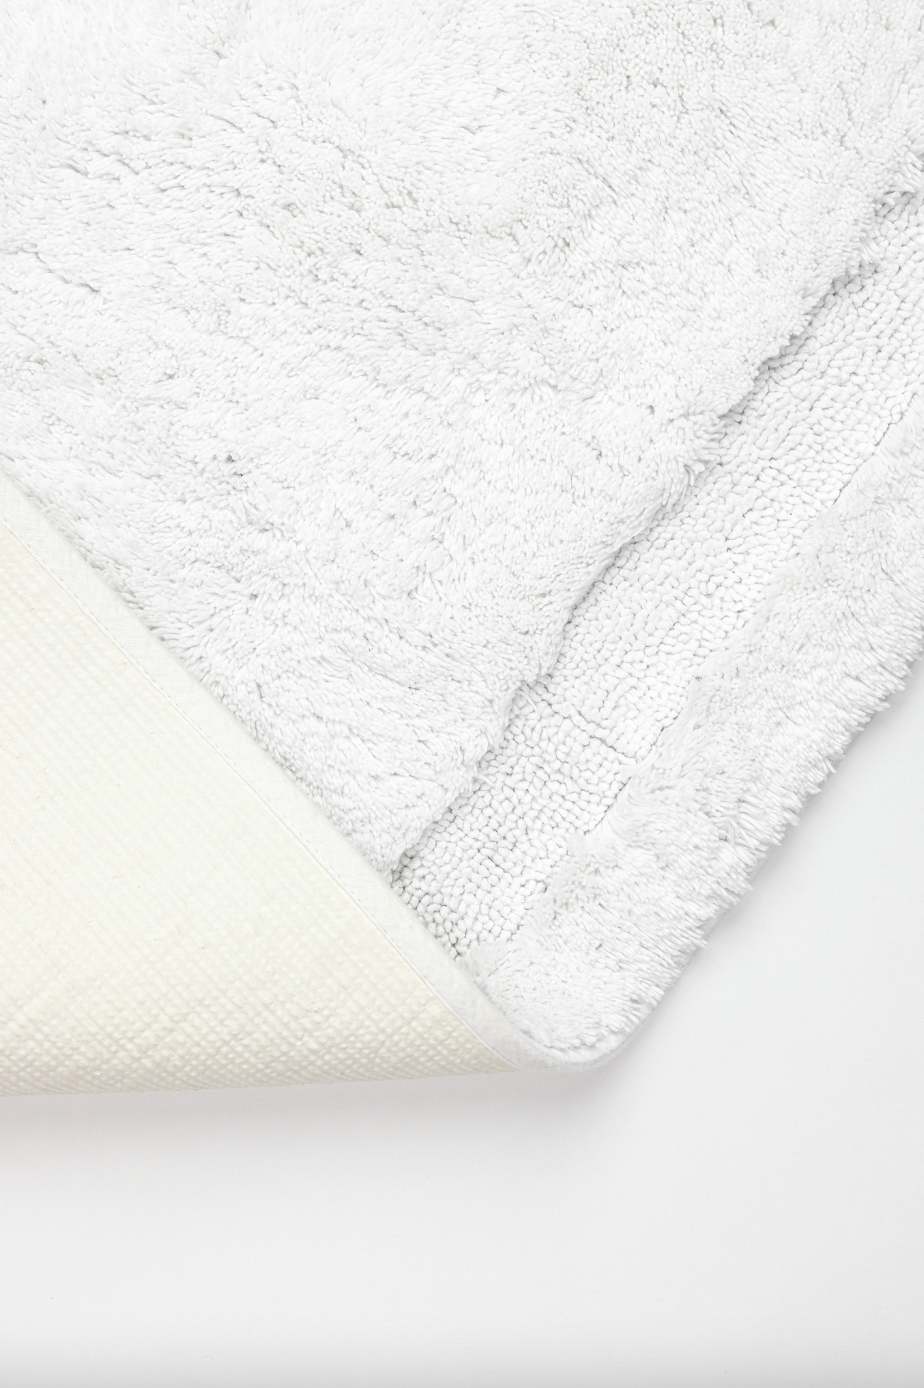 TOMORO Cotton Non-Slip Bathroom Rug - Super Absorbent Soft Non-Skid Bath  Mat, Luxury Hotel Linens Reversible Bath Mat Pad for Bathroom and Door, 29  x